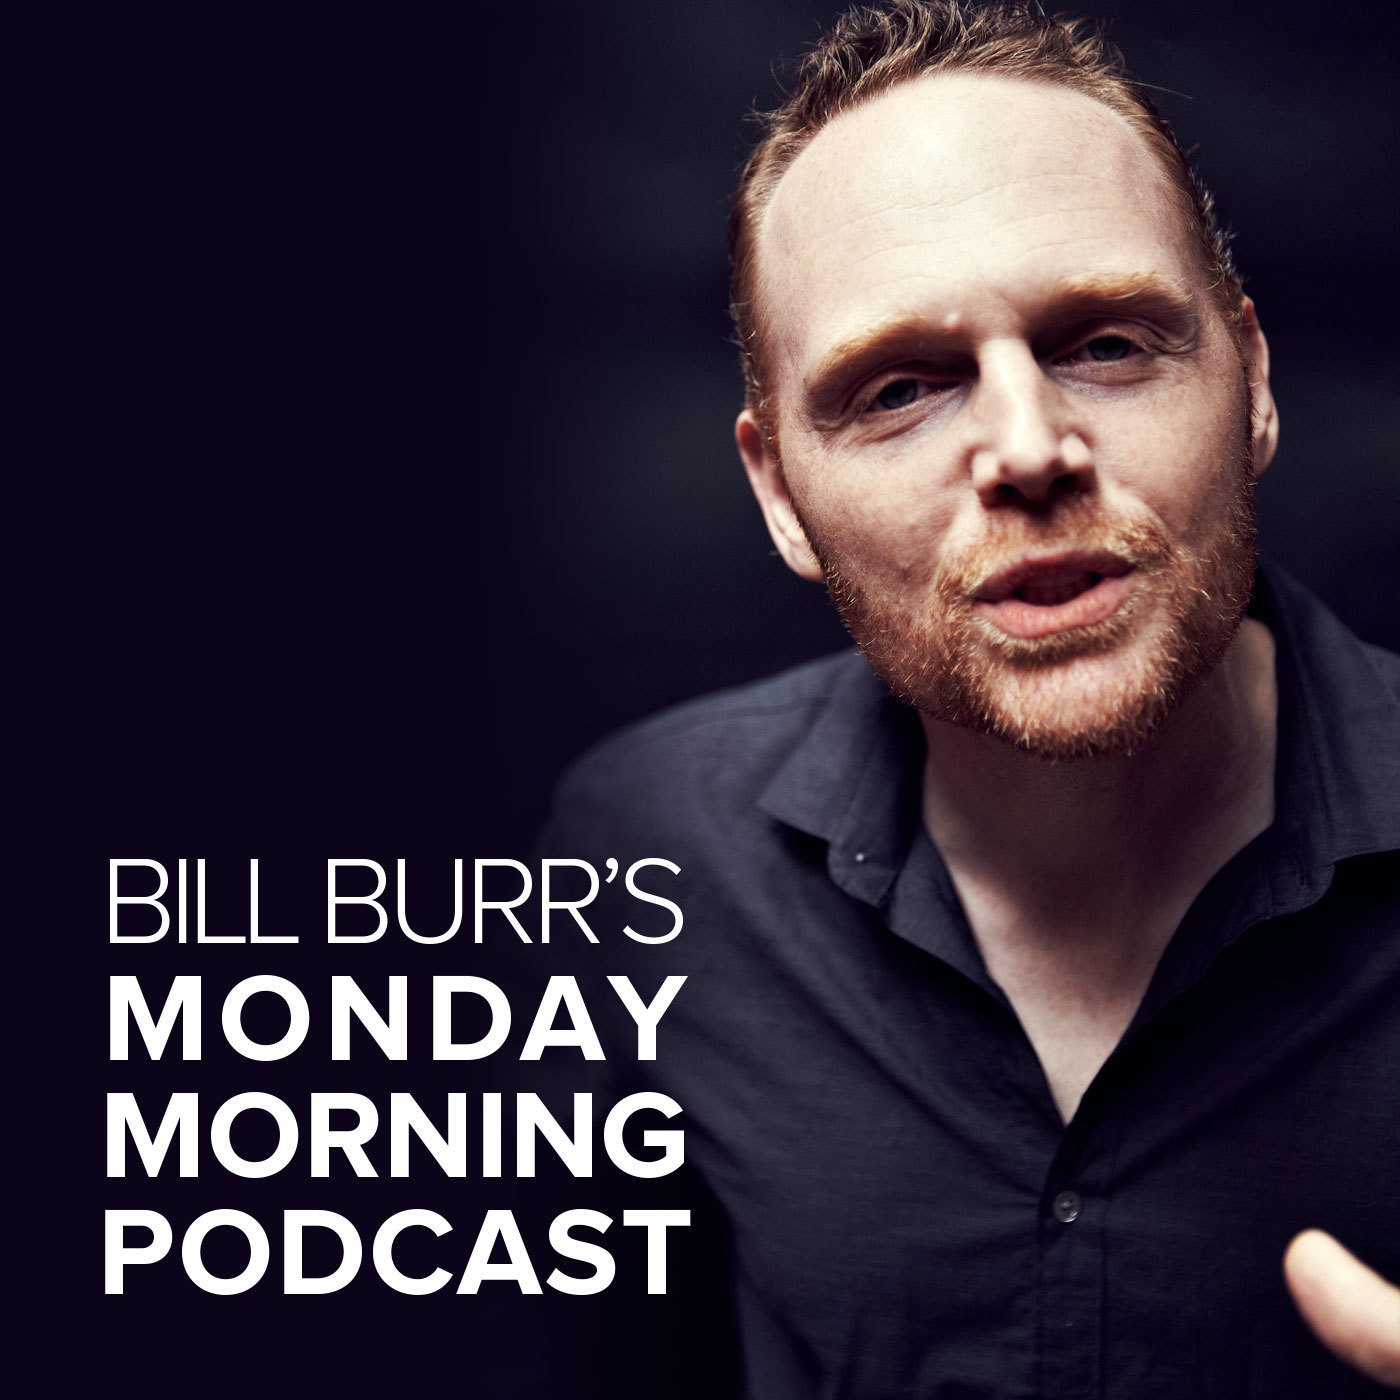 Monday Morning Podcast 3-28-16